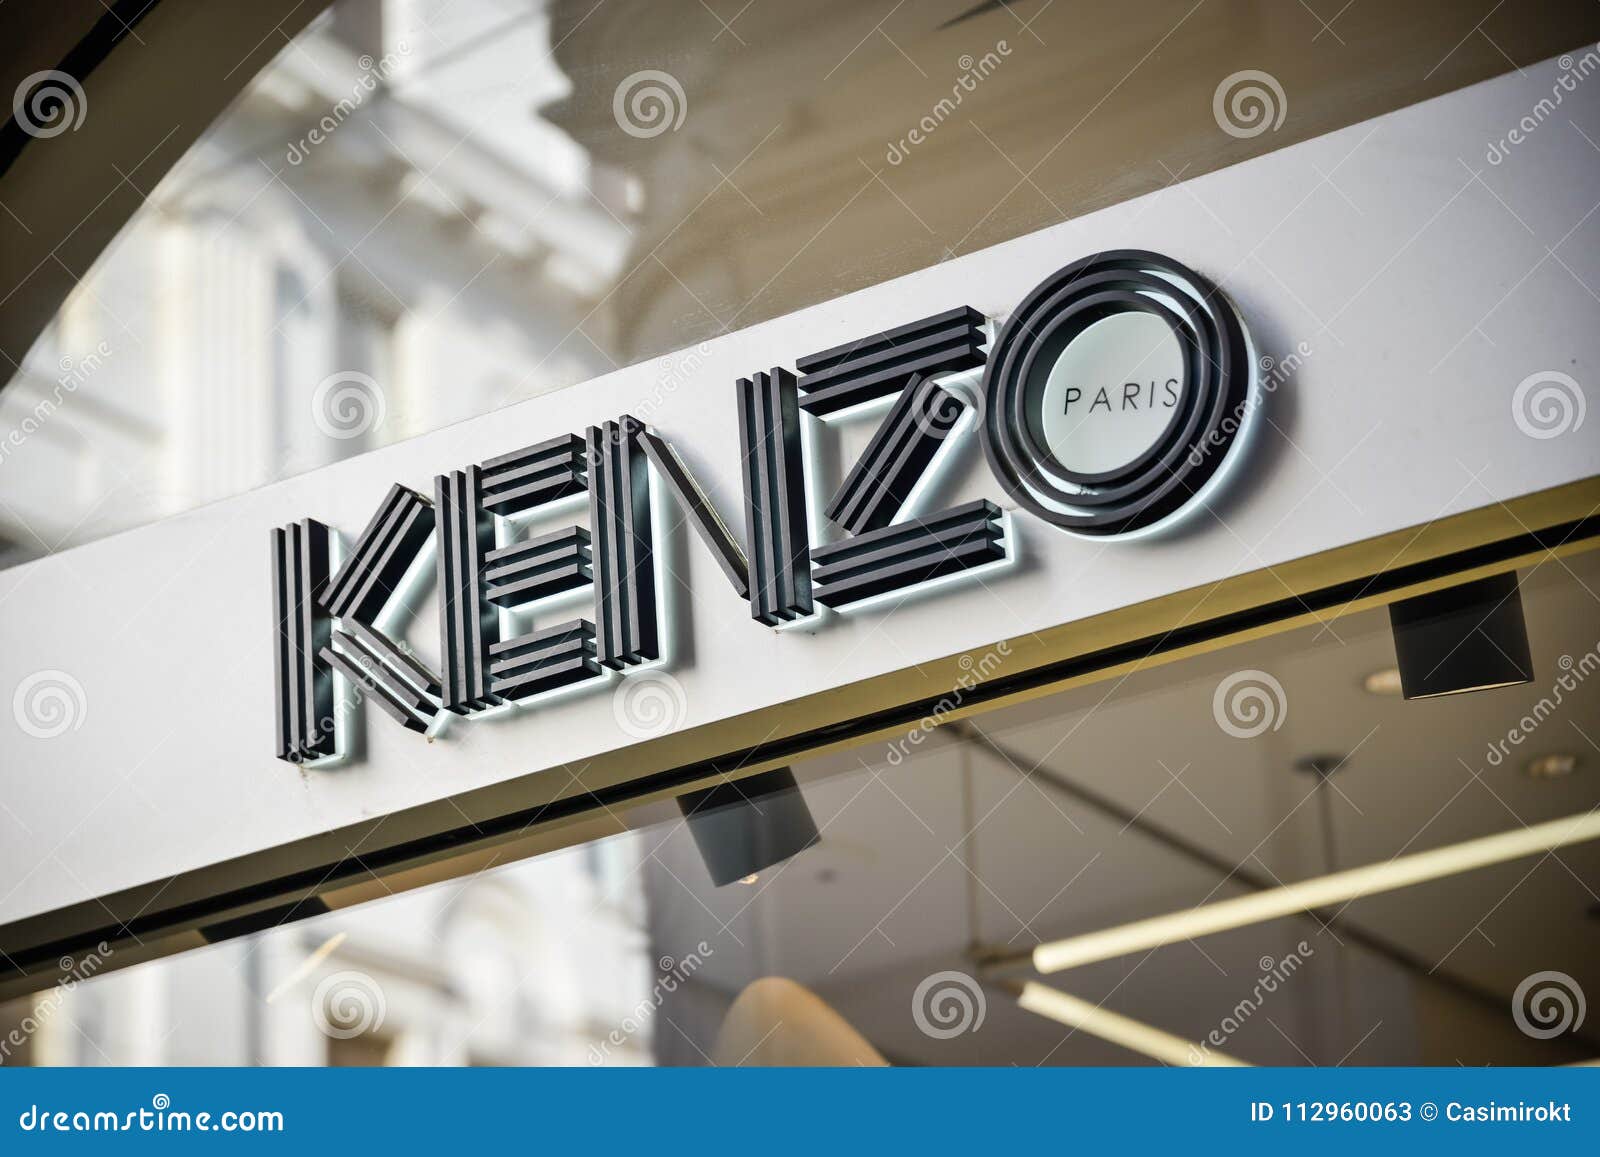 kenzo italy